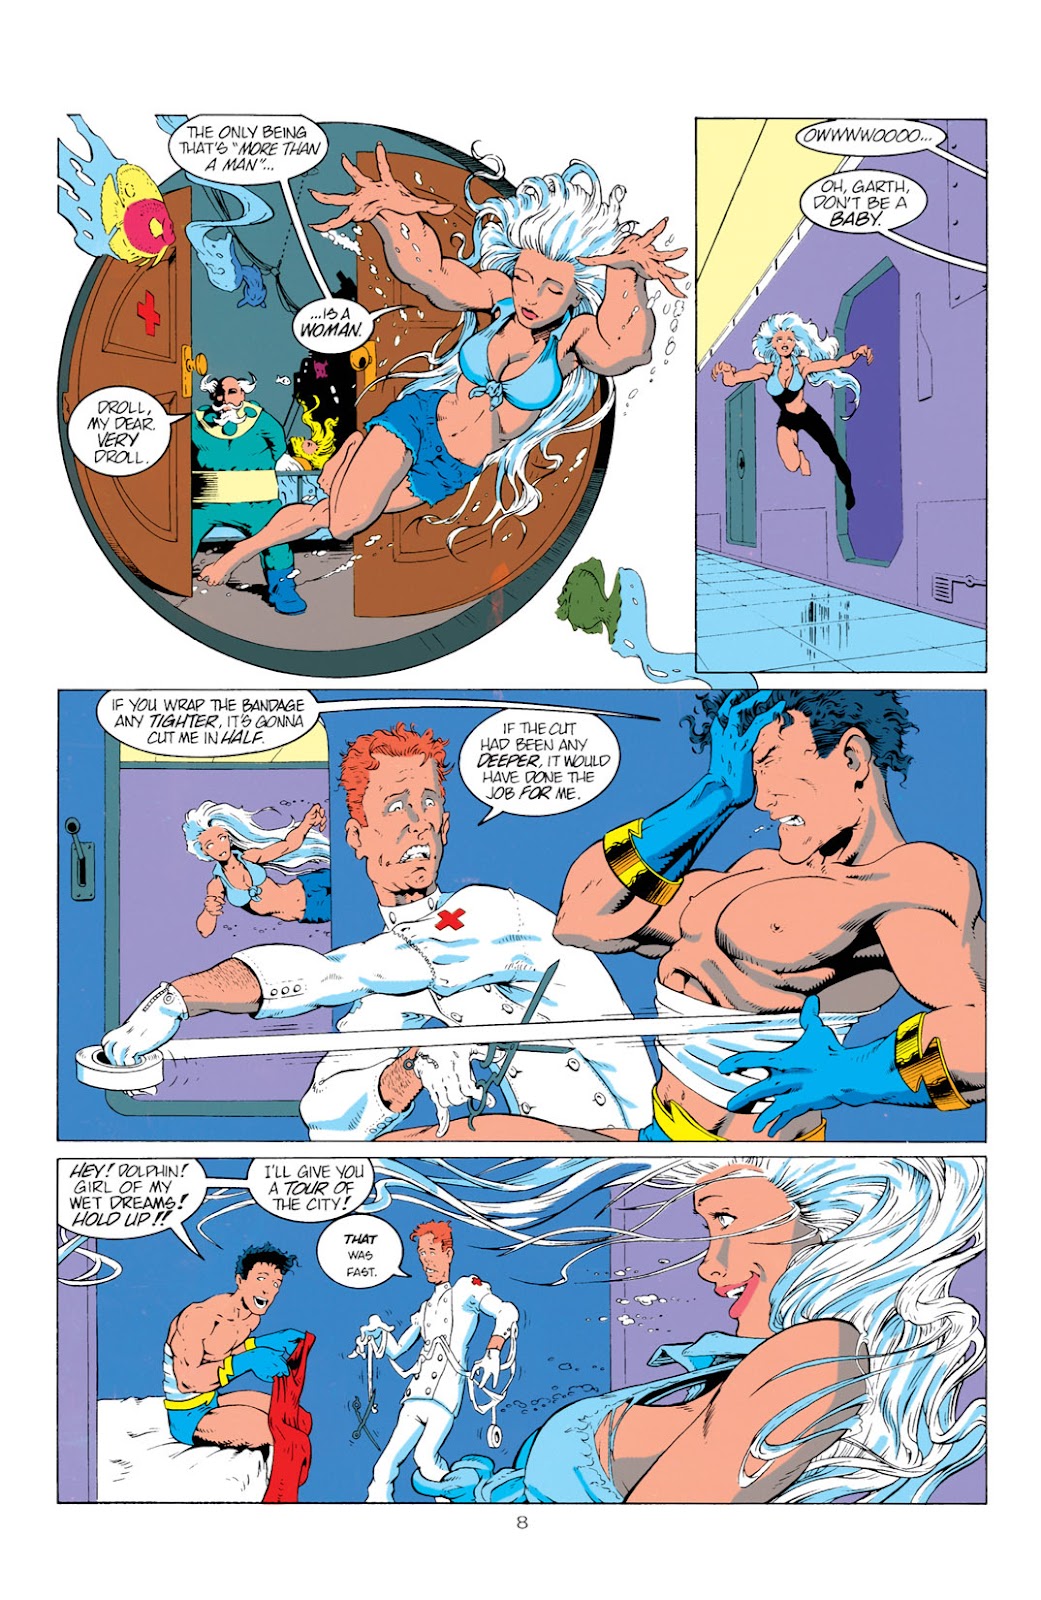 Aquaman V5 000 Viewcomic Reading Comics Online For Free 2019